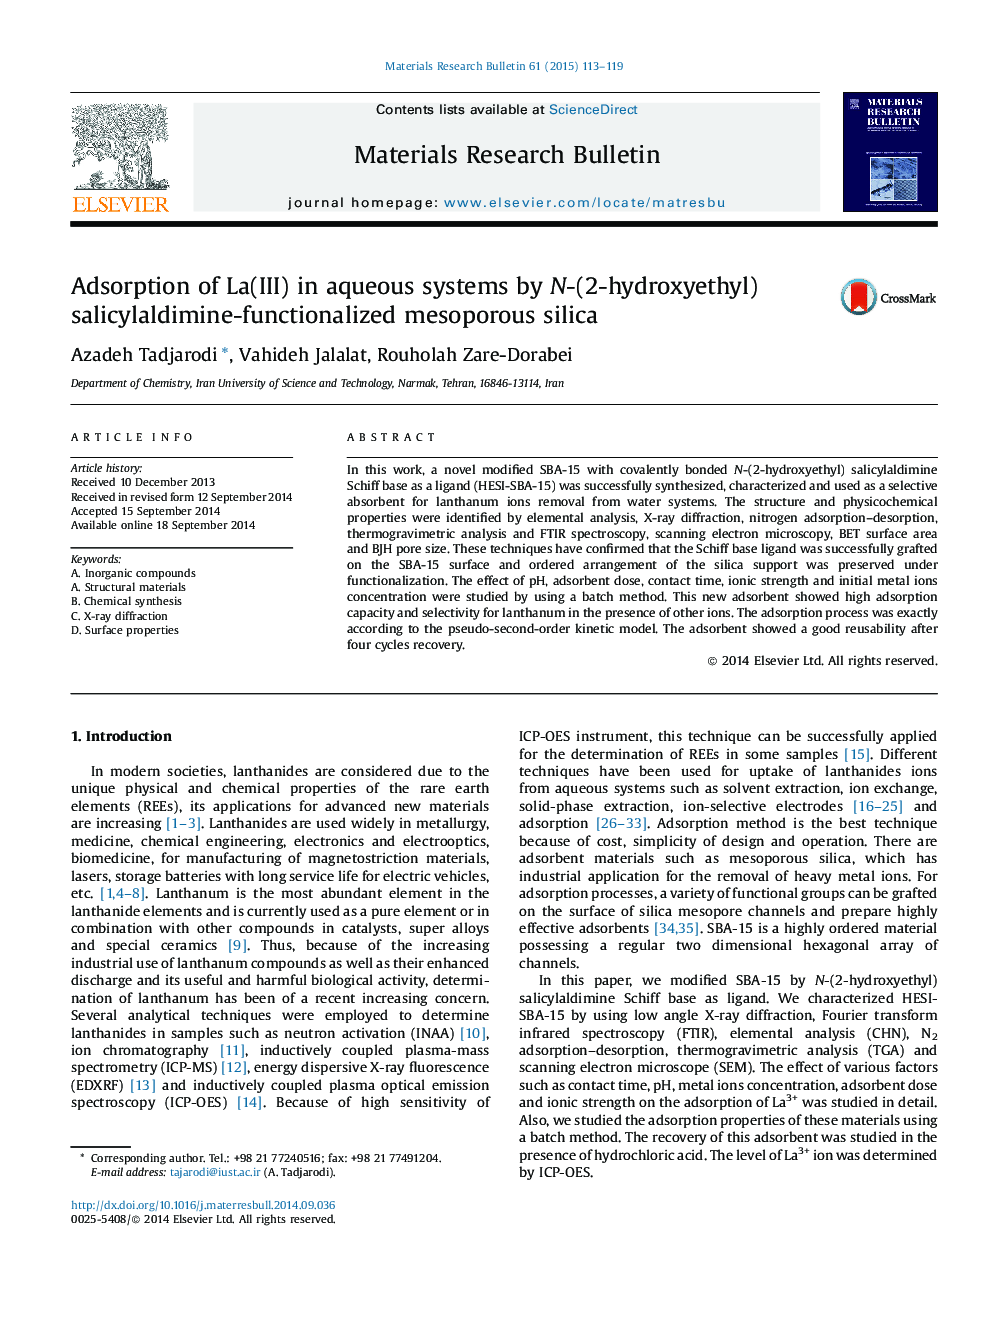 Adsorption of La(III) in aqueous systems by N-(2-hydroxyethyl) salicylaldimine-functionalized mesoporous silica